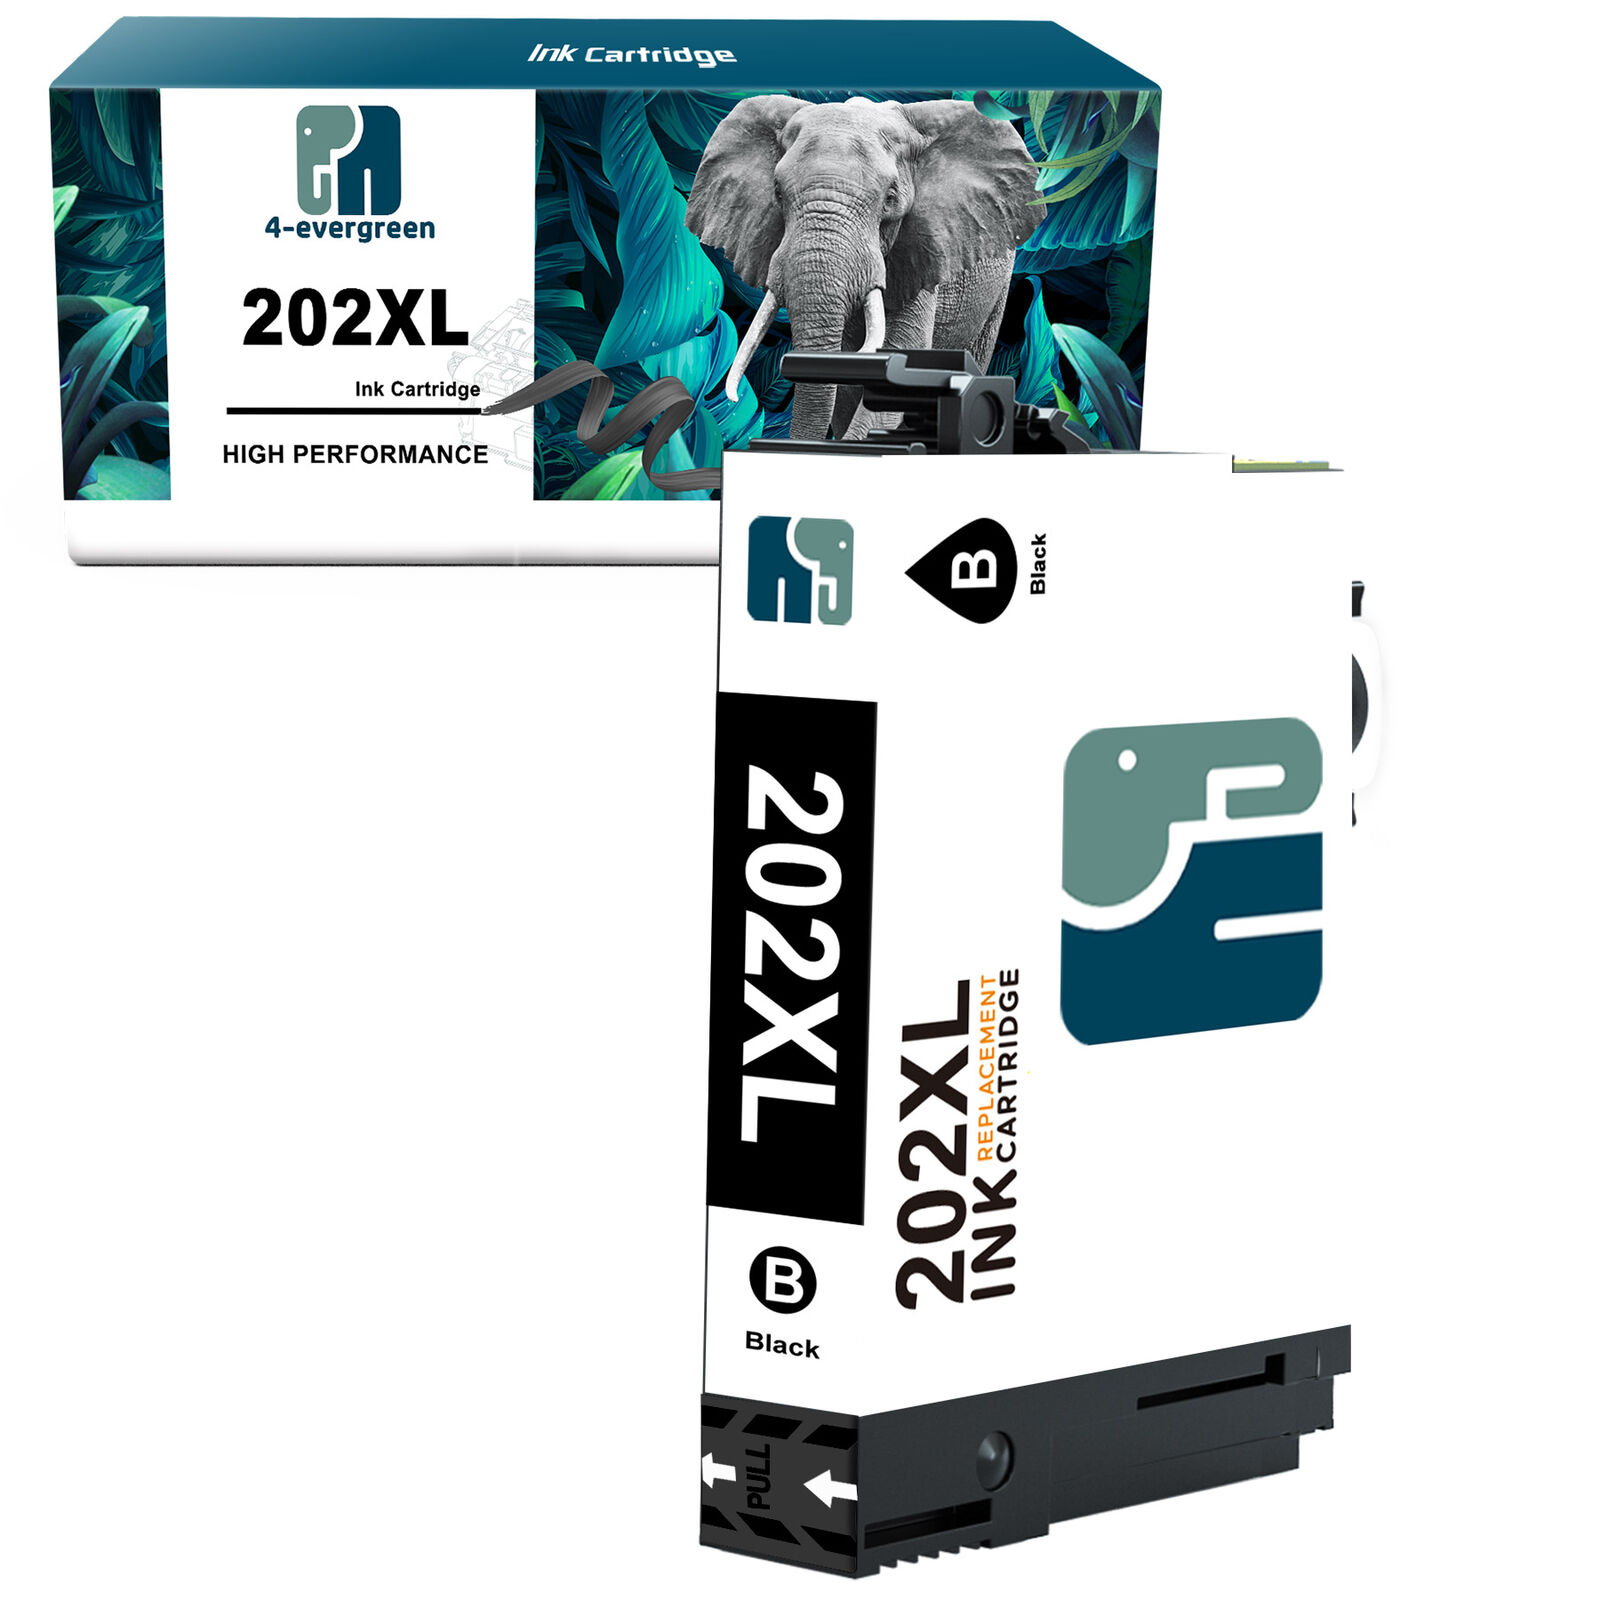 202 XL T202XL Reman Ink Cartridges for Epson Expression XP-5100 WF-2860 Lot